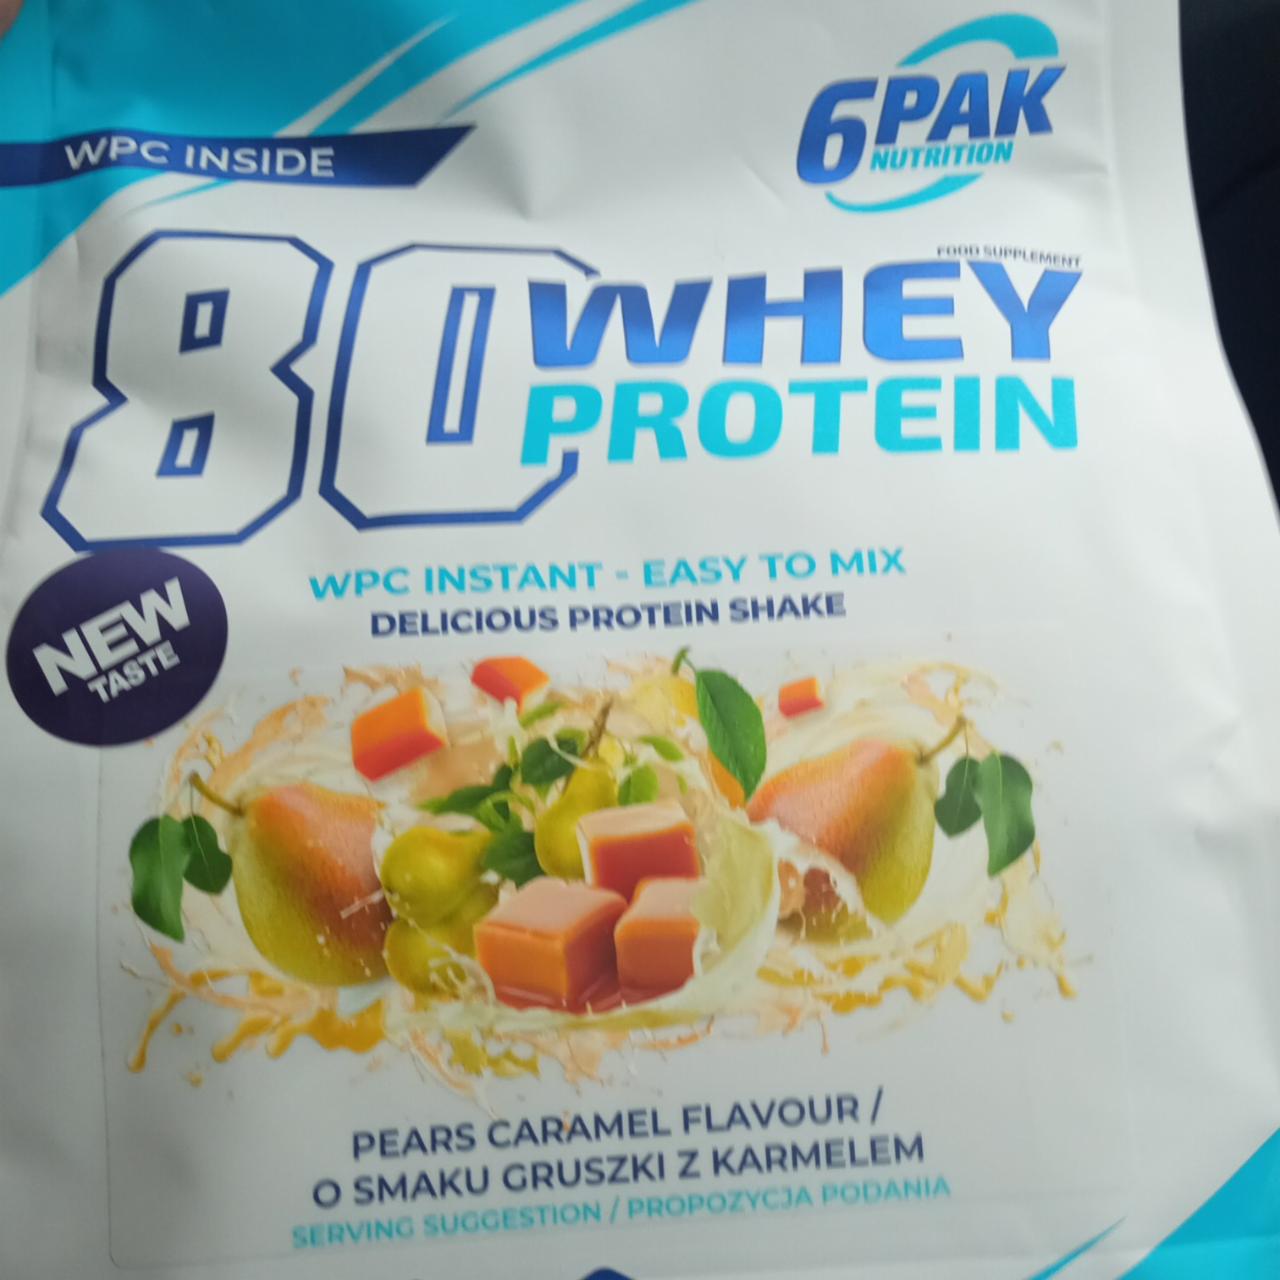 Fotografie - 80 Whey protein Pears Caramel 6PAK Nutrition